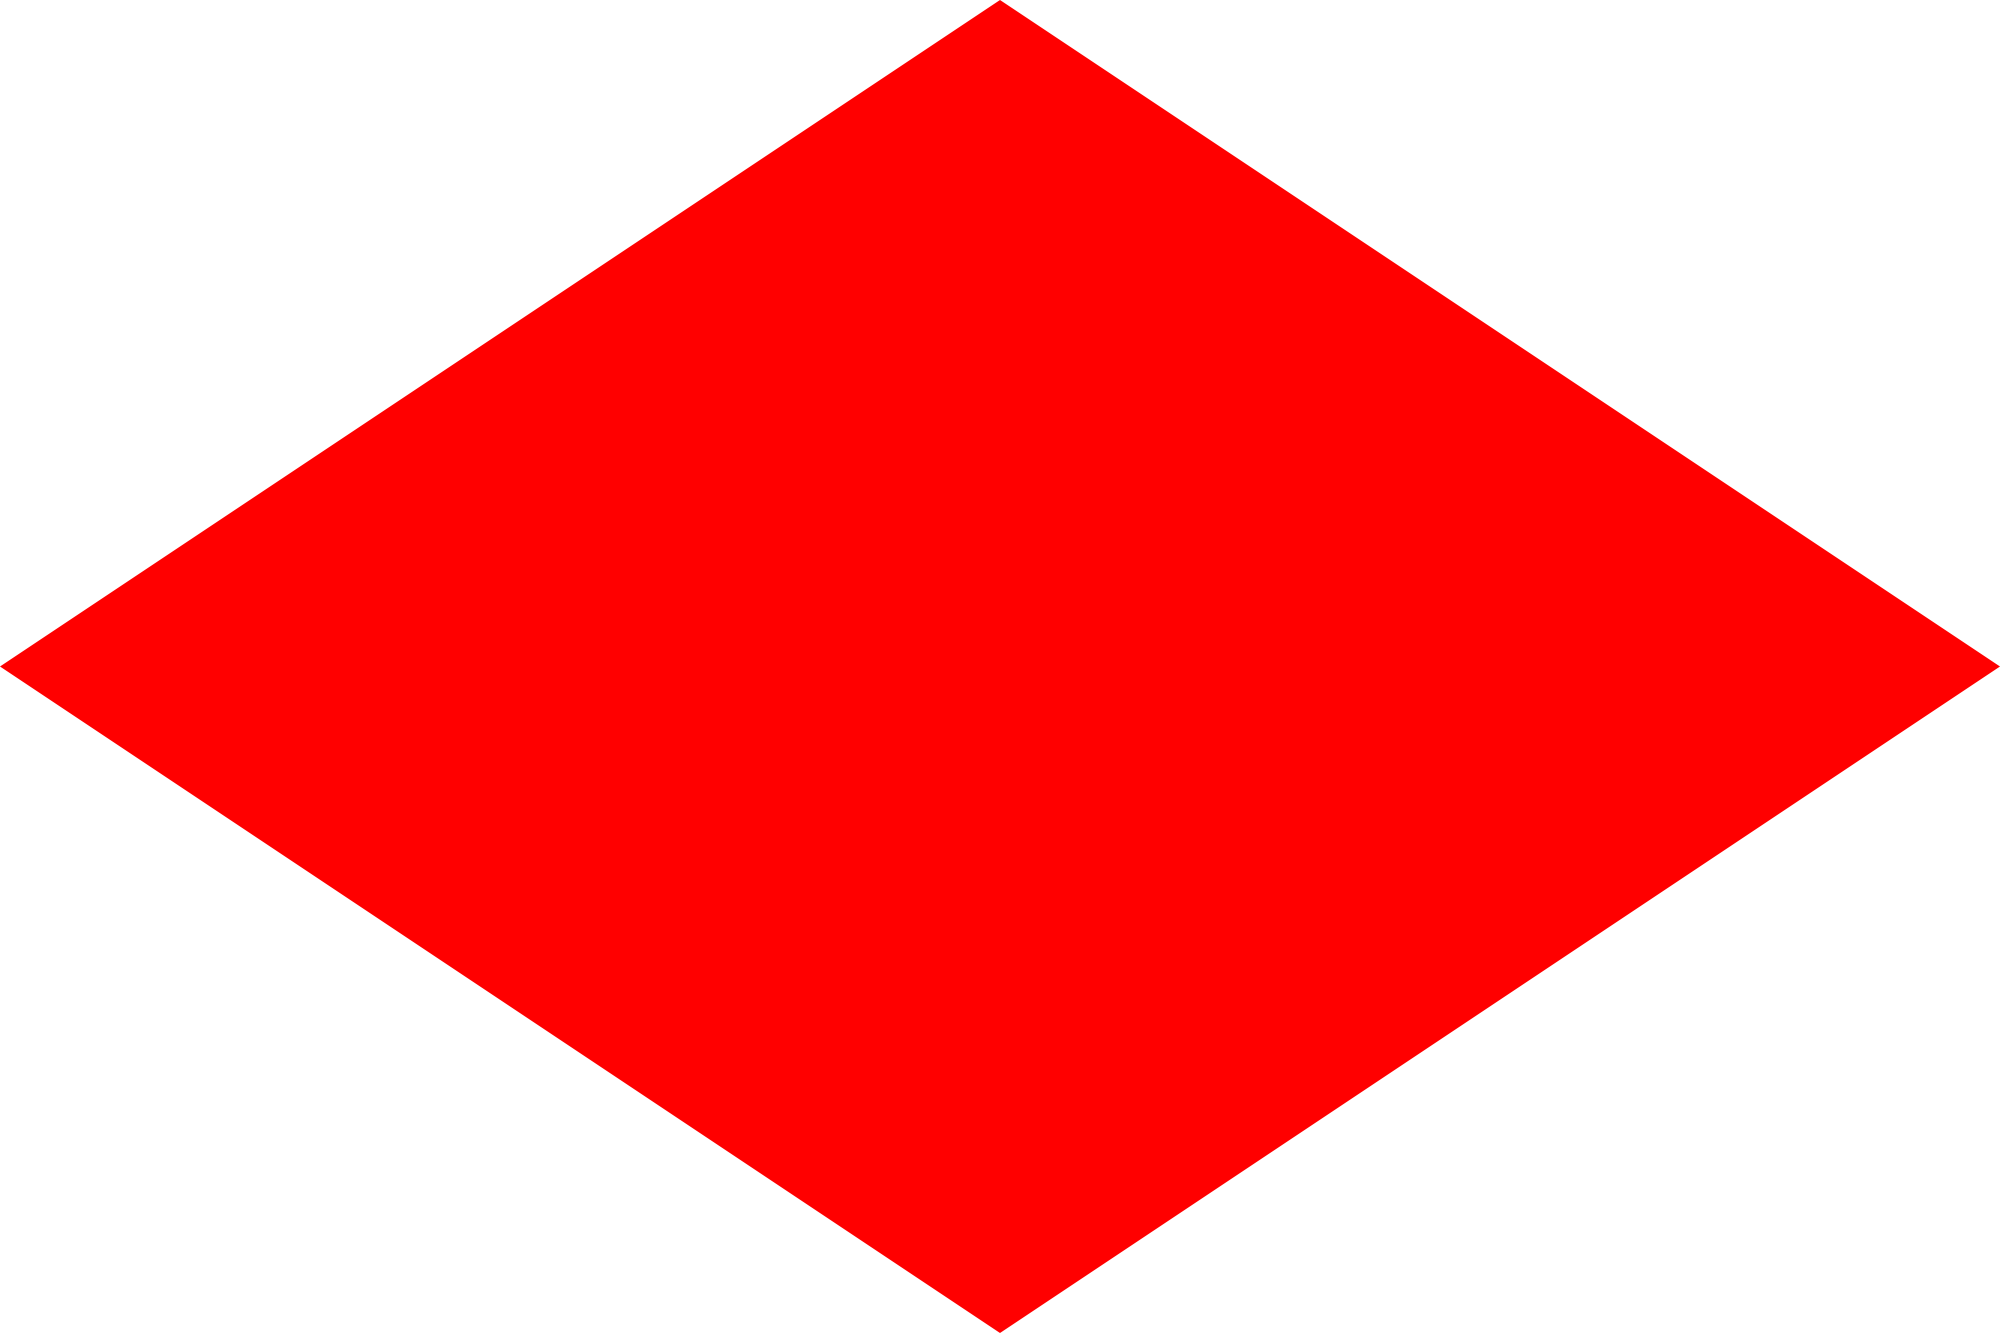 foxtrot nautical flag